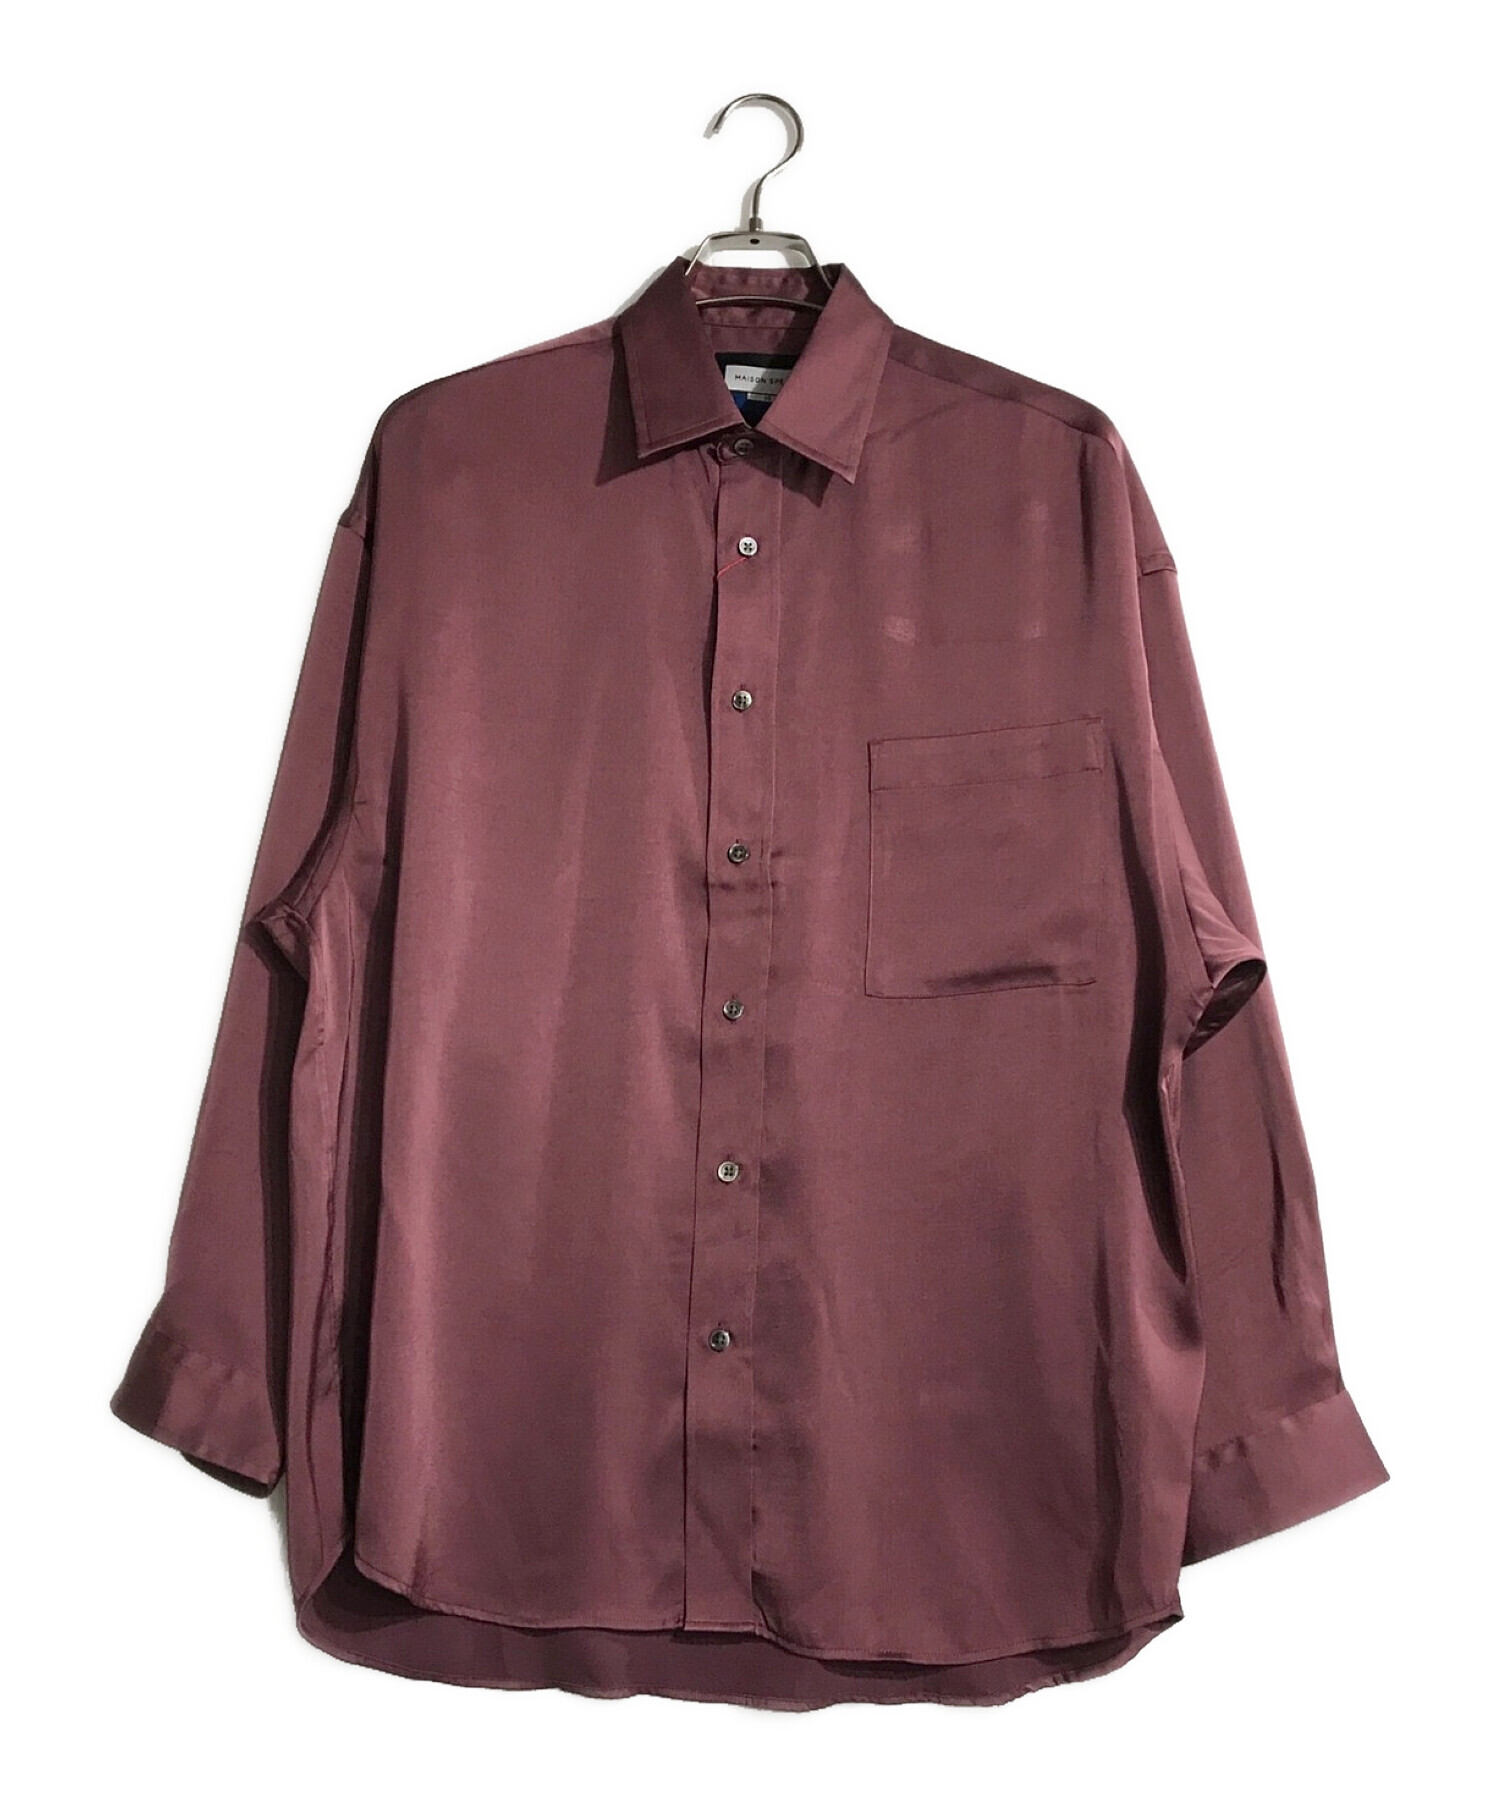 MAISON SPECIAL (メゾンスペシャル) シャイニーサテンプライムオーバーレギュラーシャツ ピンク サイズ:00 未使用品